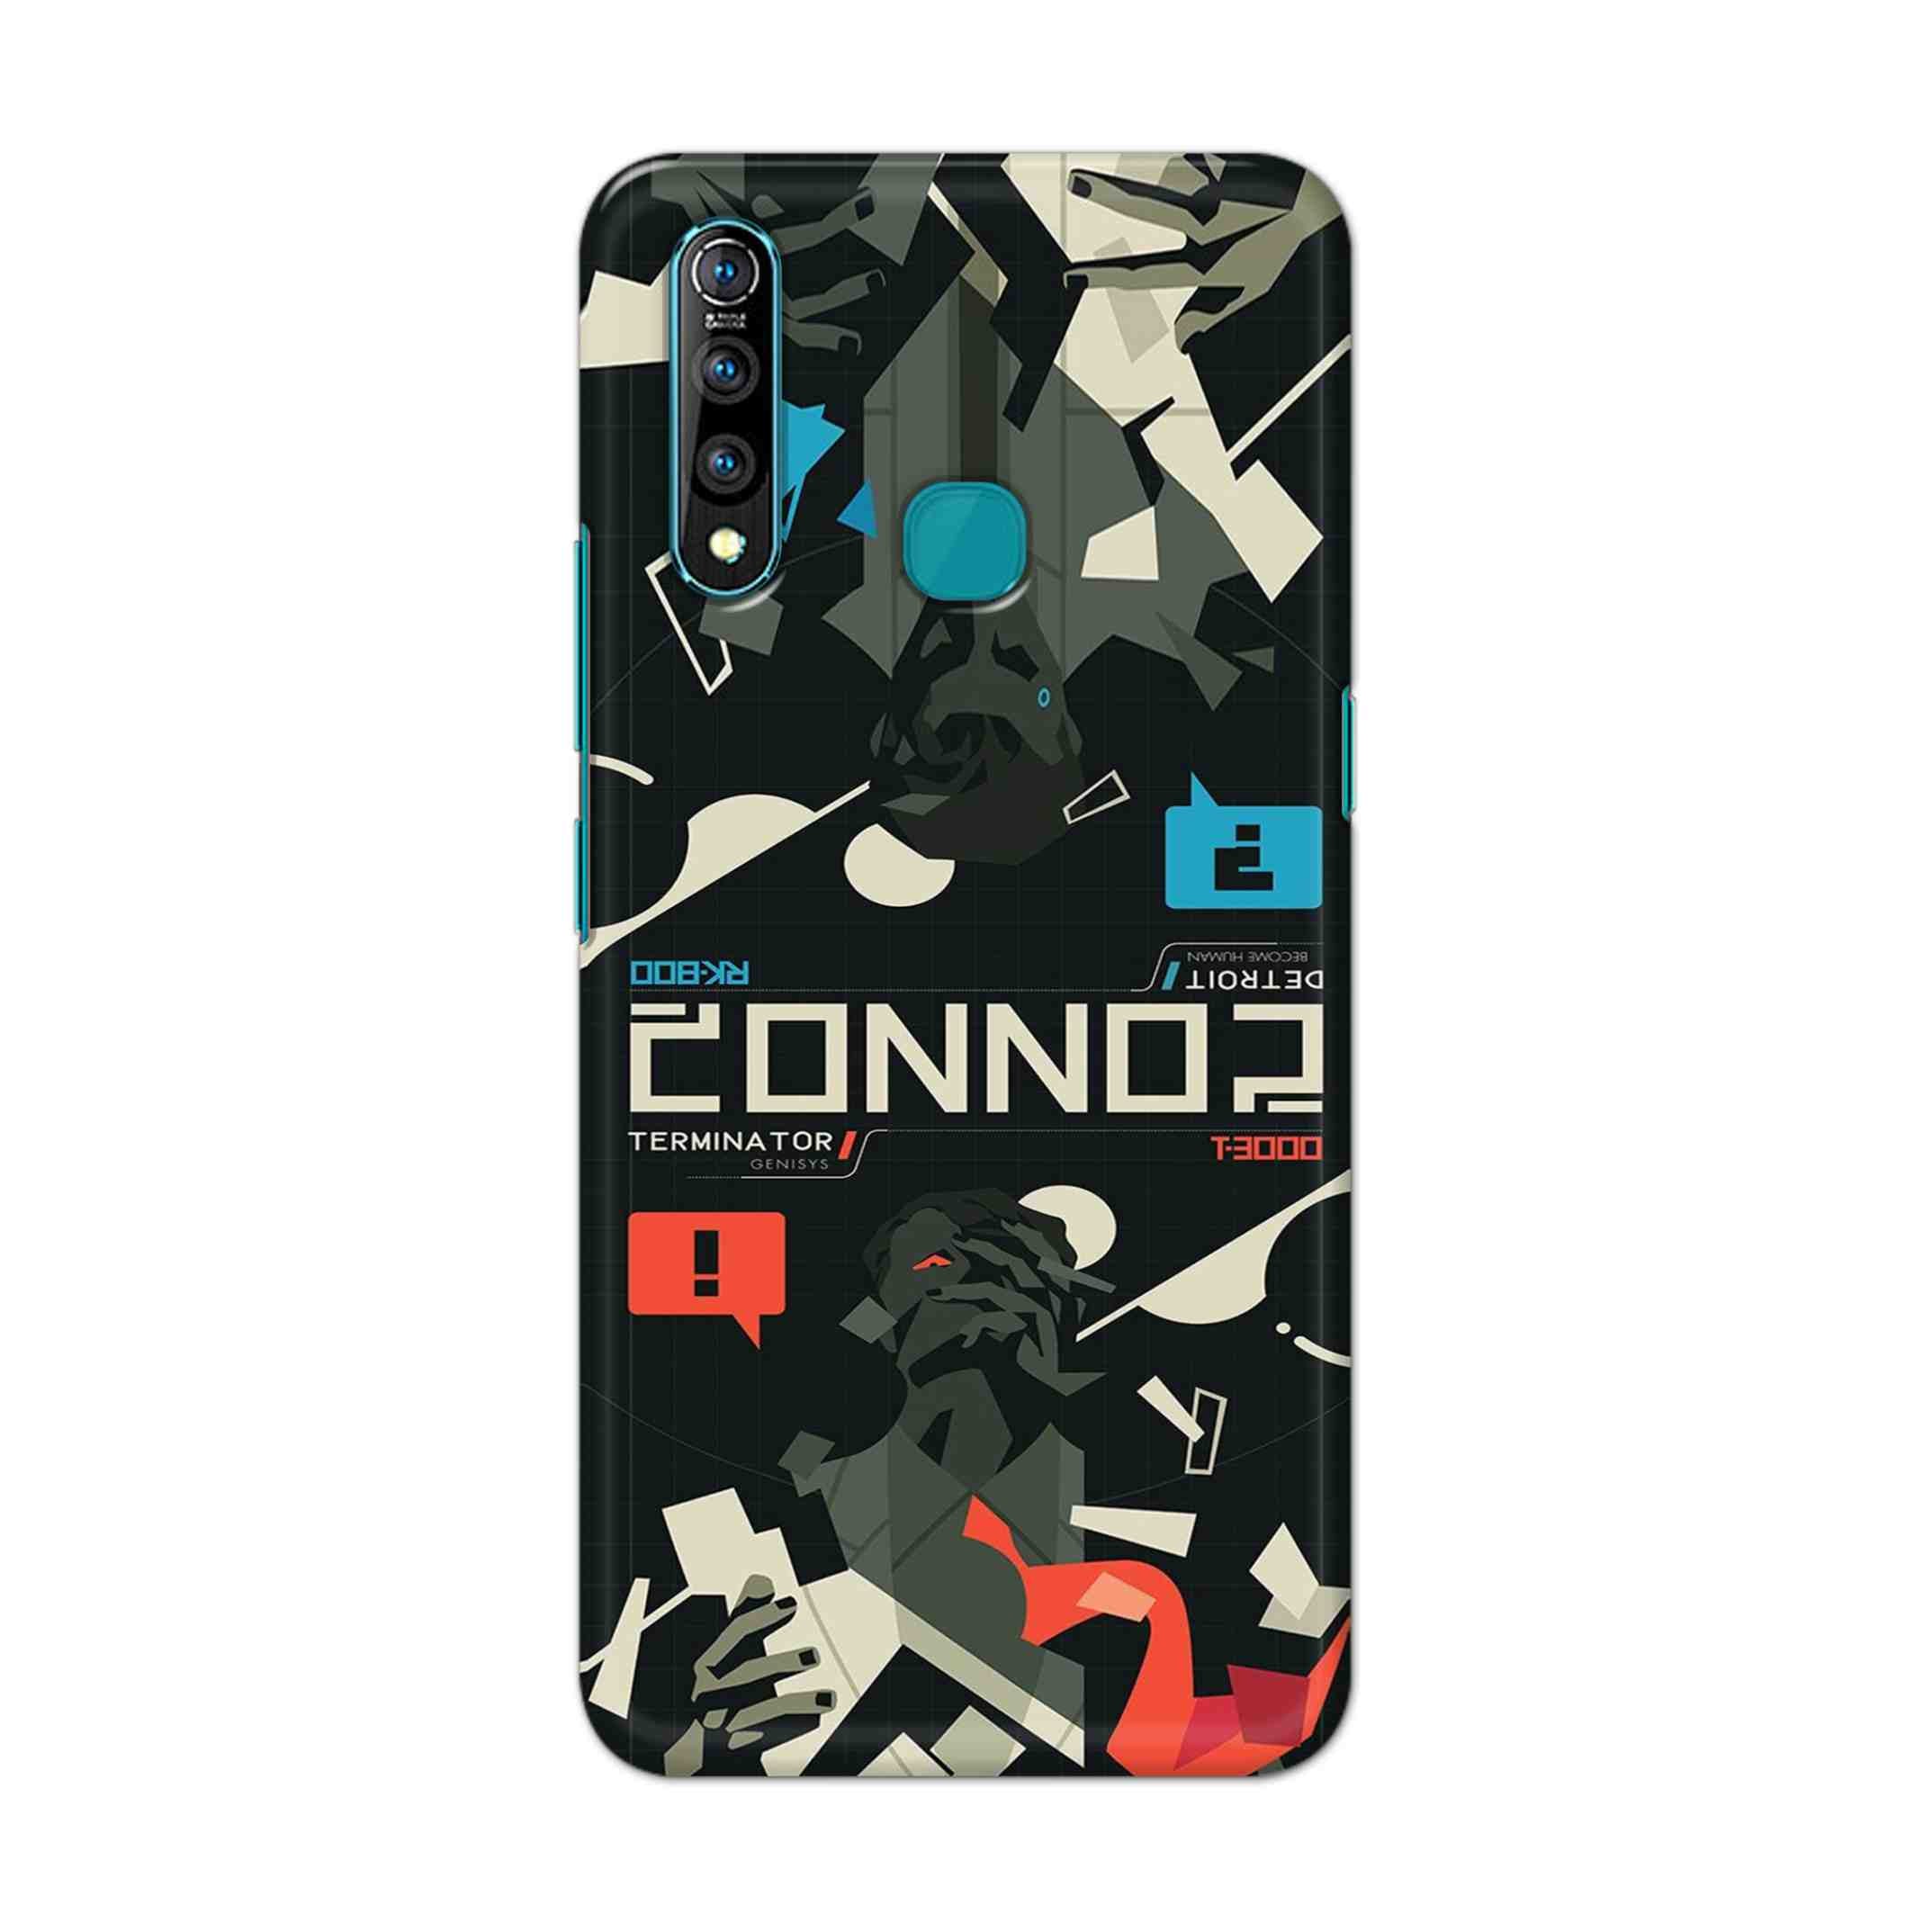 Buy Terminator Hard Back Mobile Phone Case Cover For Vivo Z1 pro Online